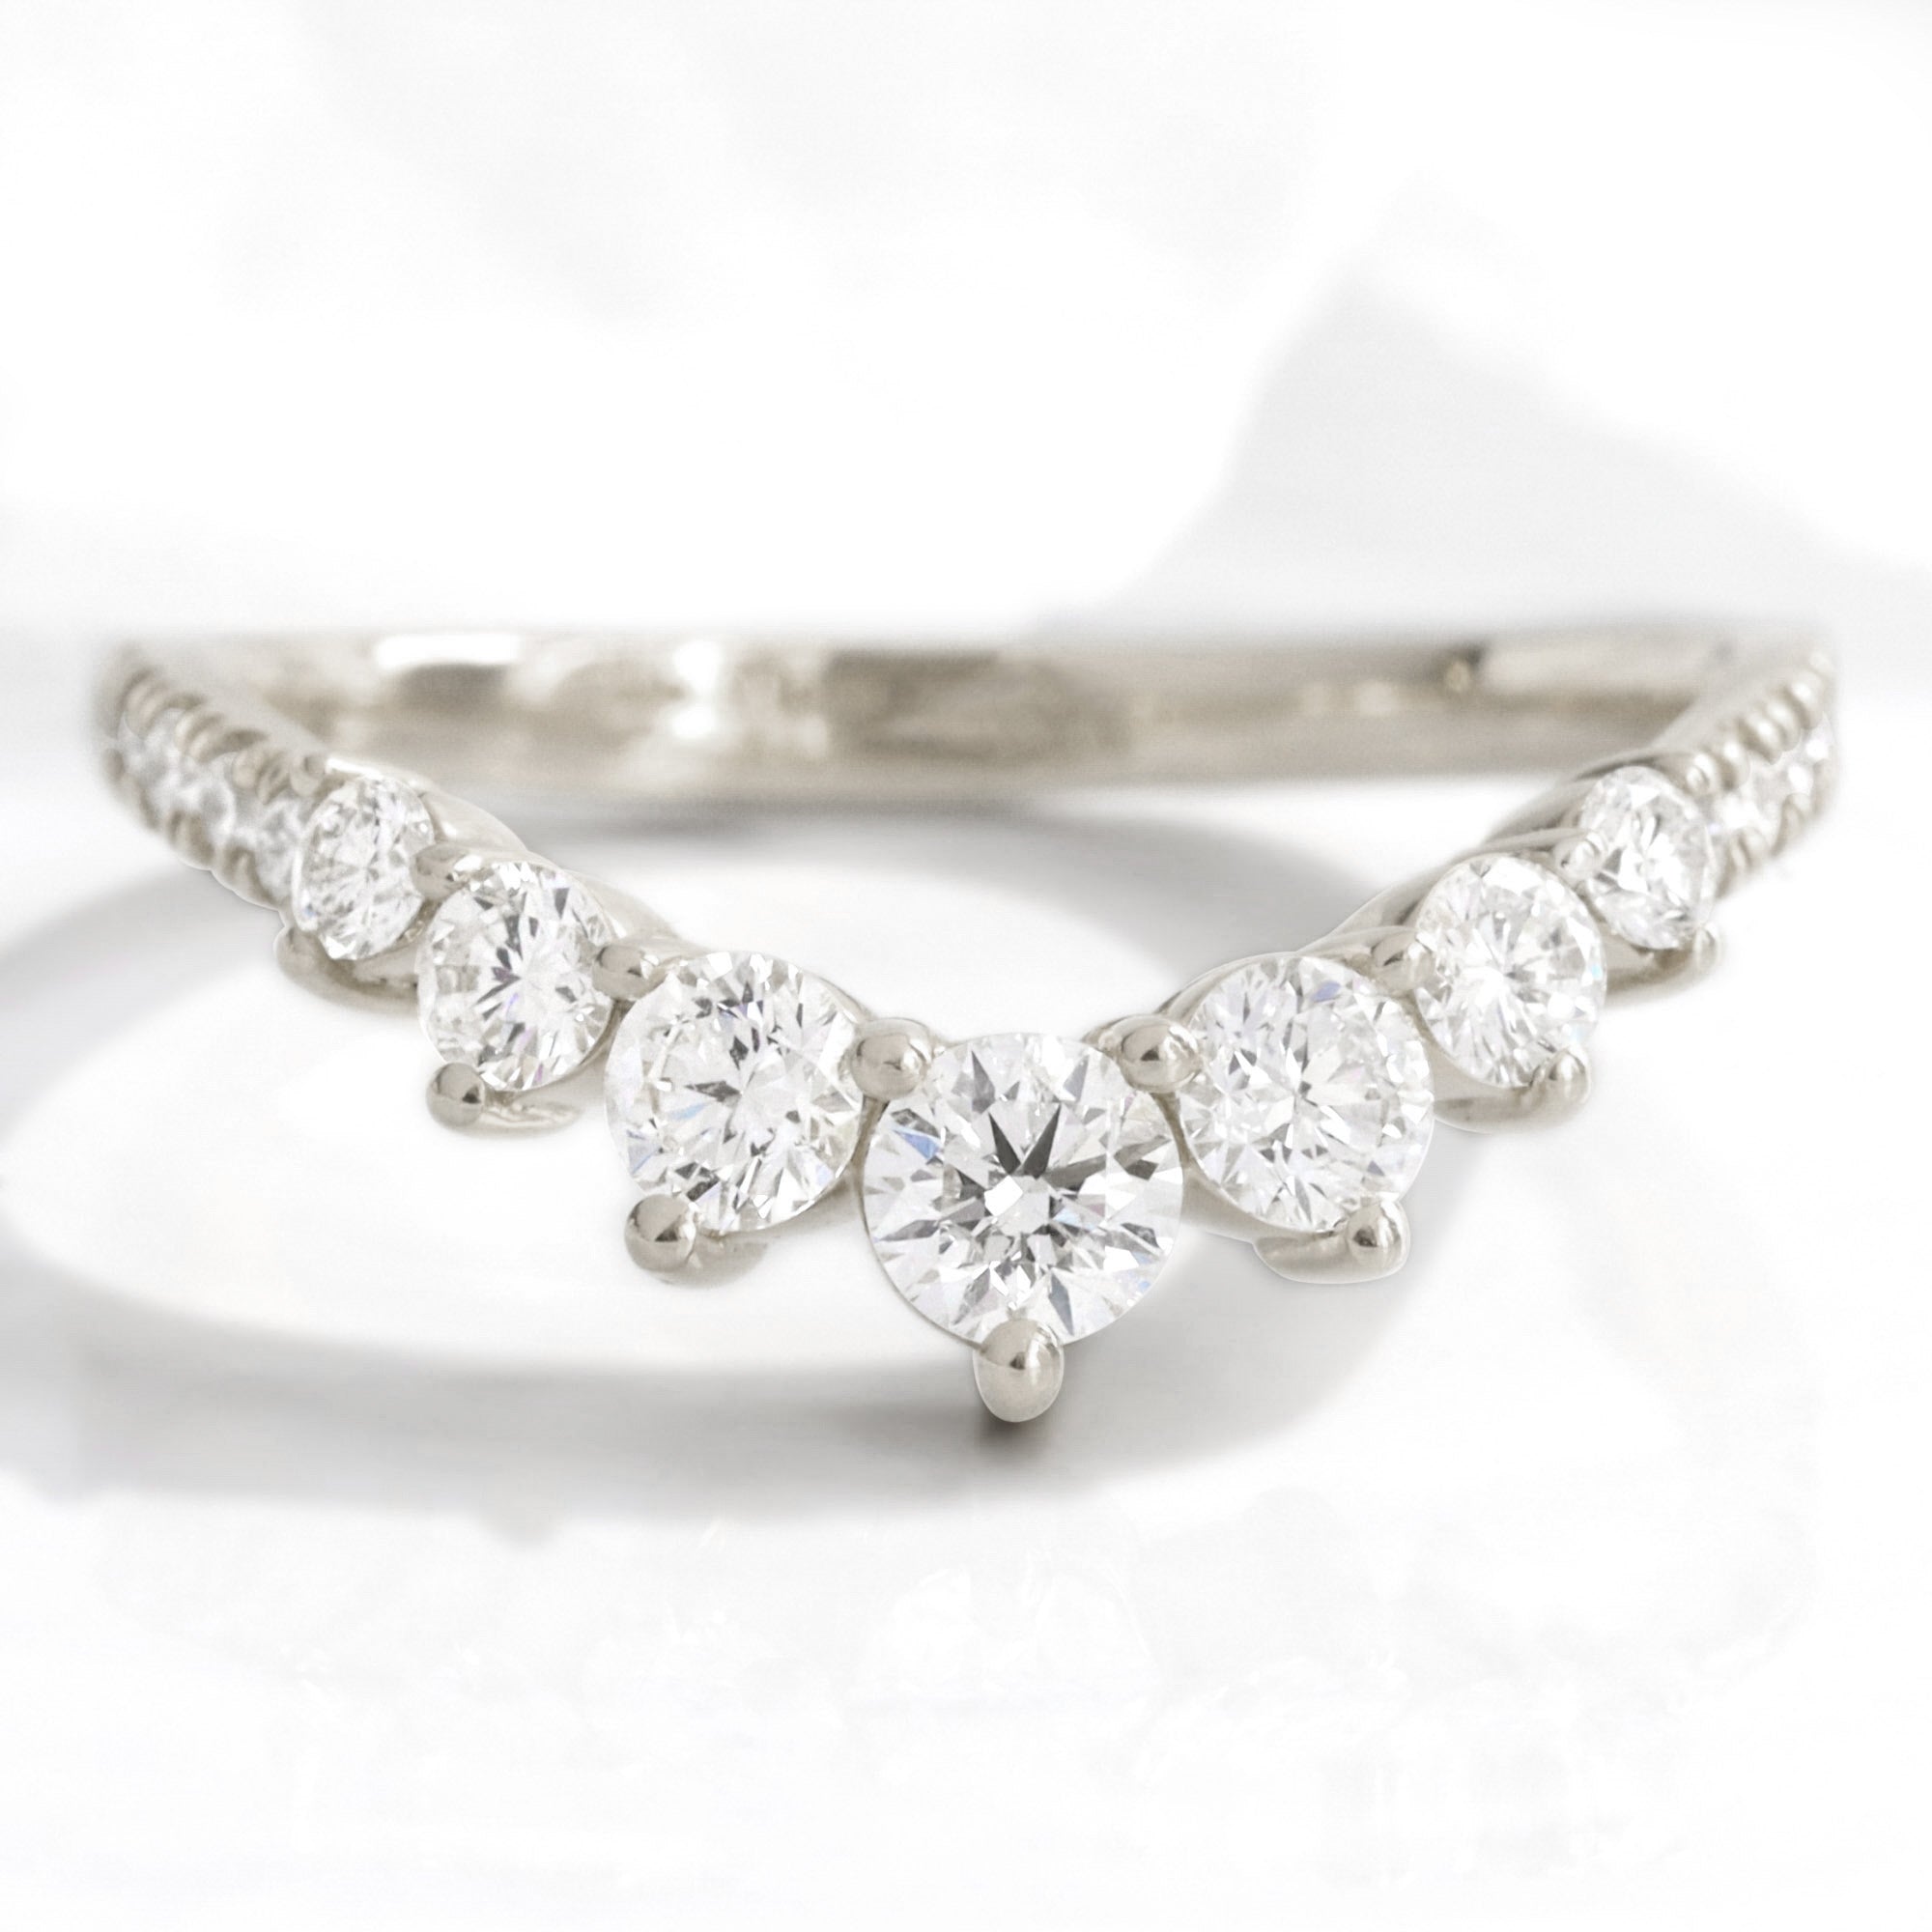 Large 7 diamond wedding ring white gold U shaped curved pave band la more design jewelry